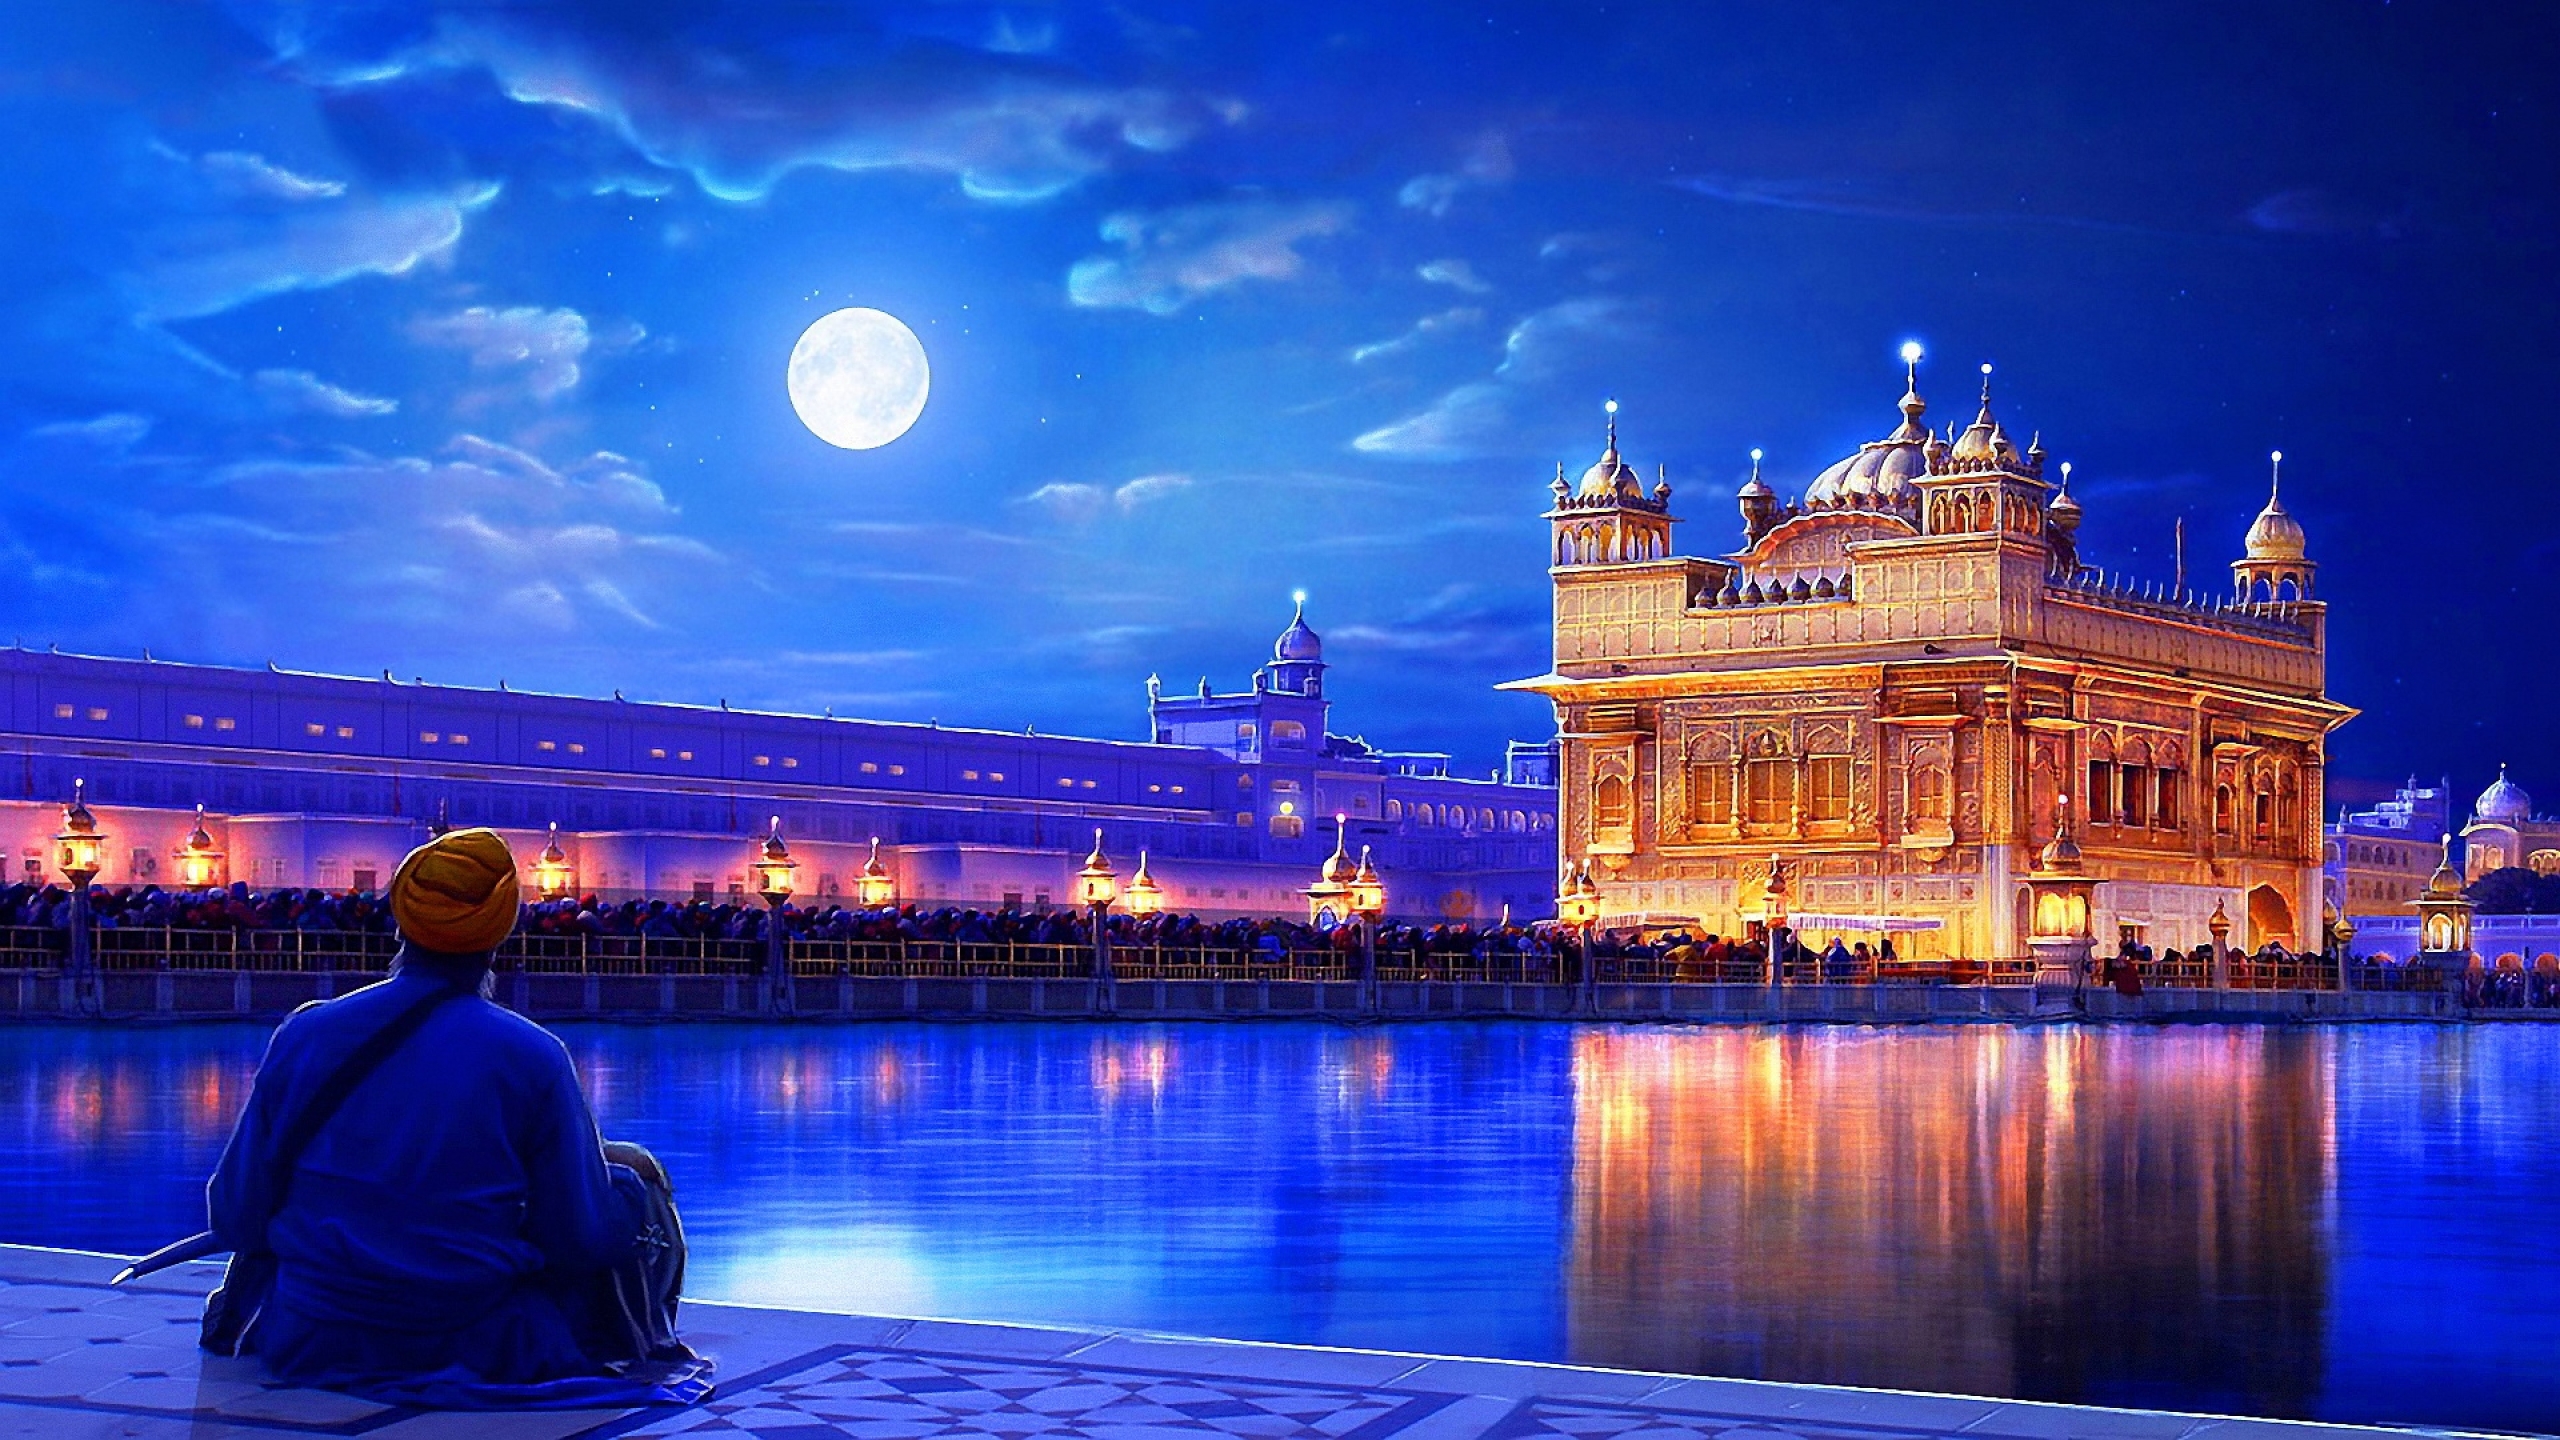 Golden Temple Amritsar India for 2560 x 1440 HDTV resolution